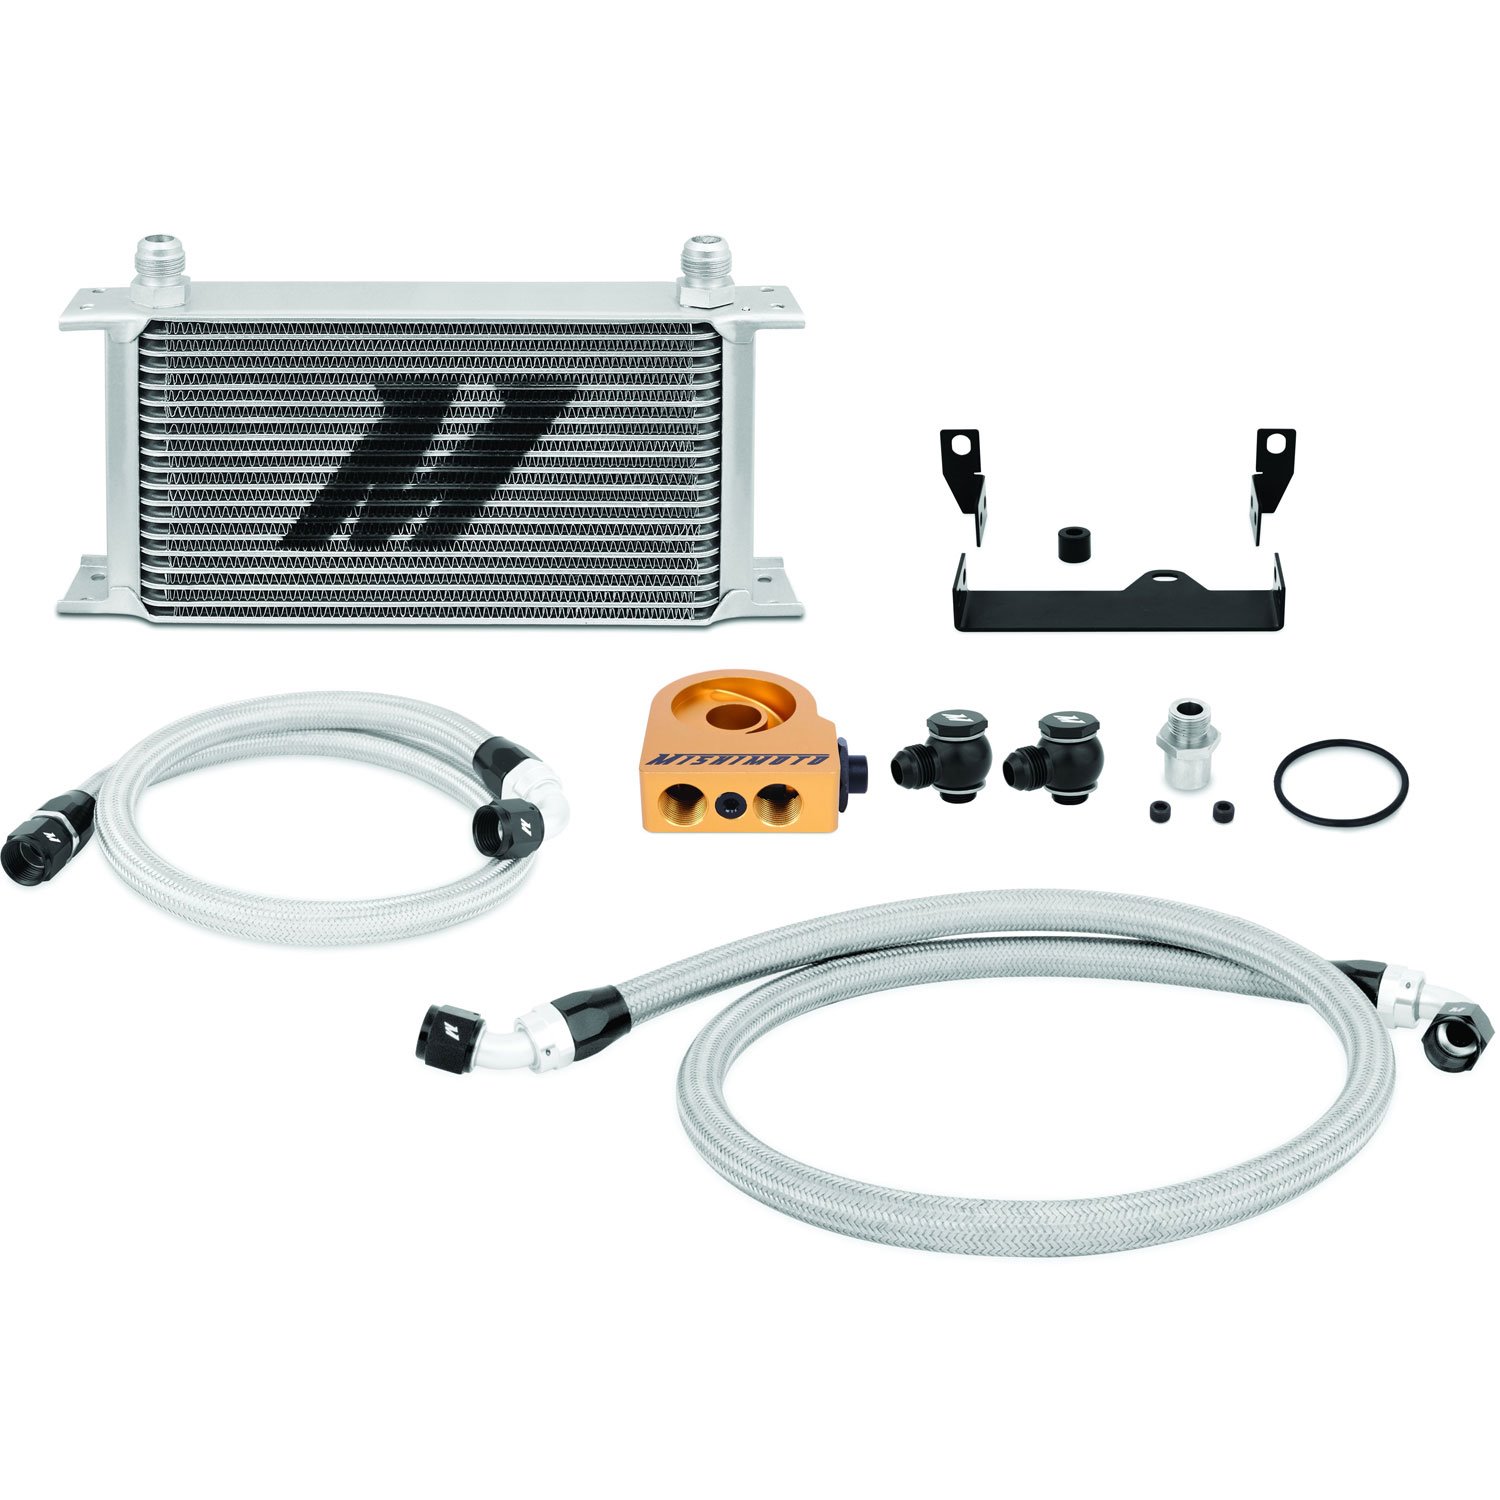 Subaru WRX/STi Thermostatic Oil Cooler Kit - MFG Part No. MMOC-WRX-06T